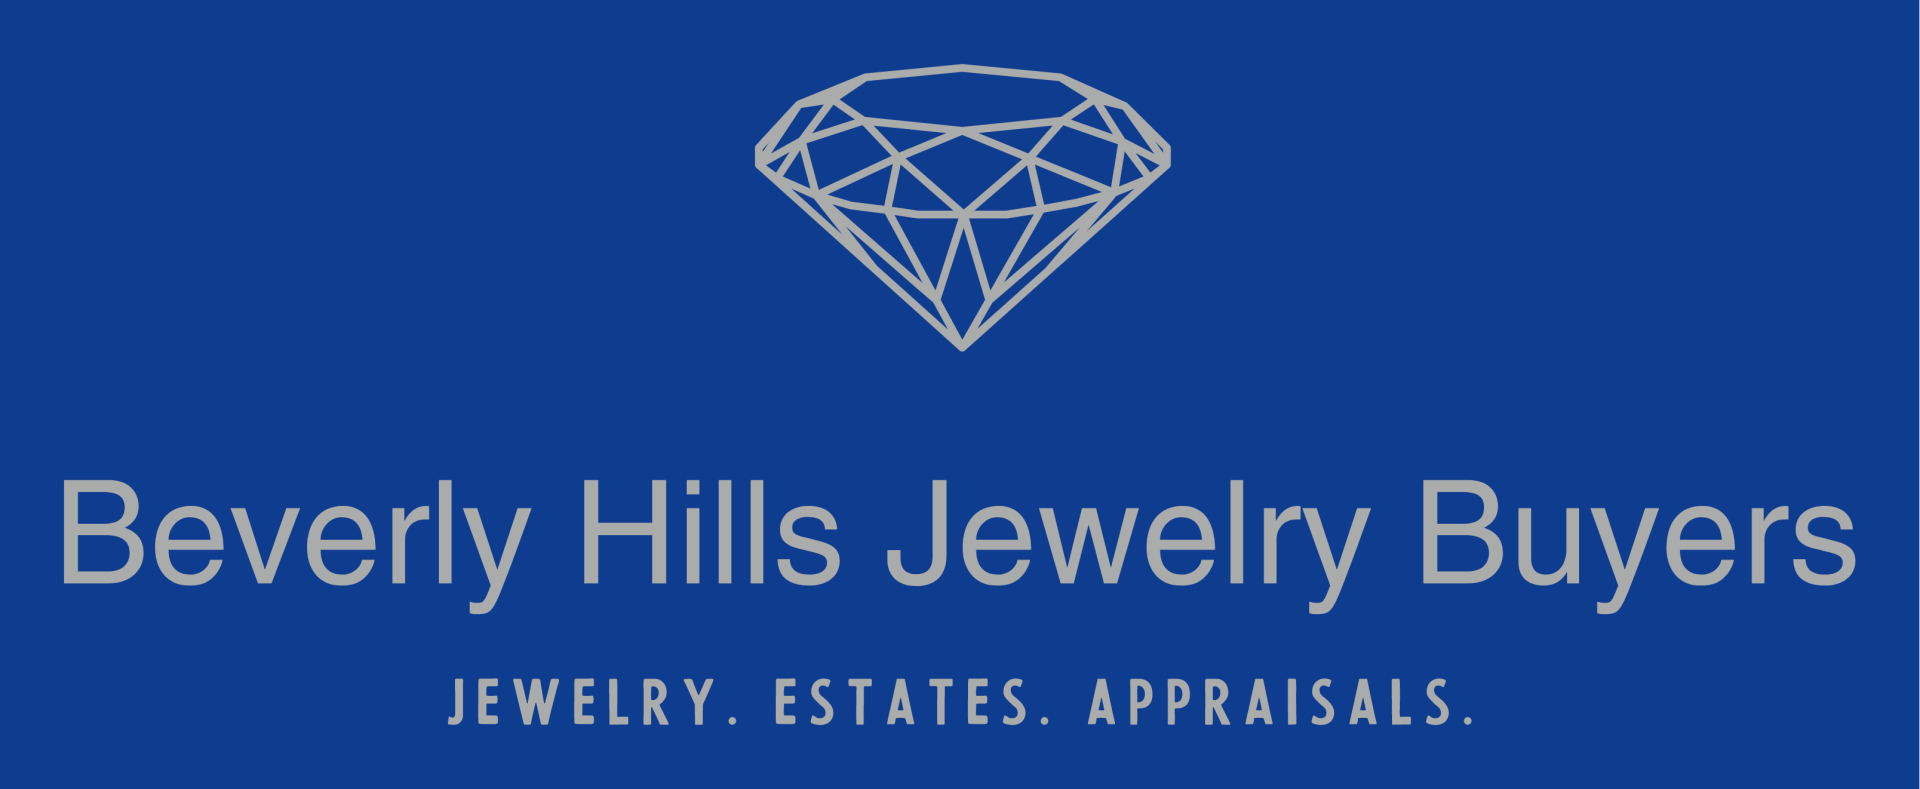 Beverly Hills Jewelry Buyers logo